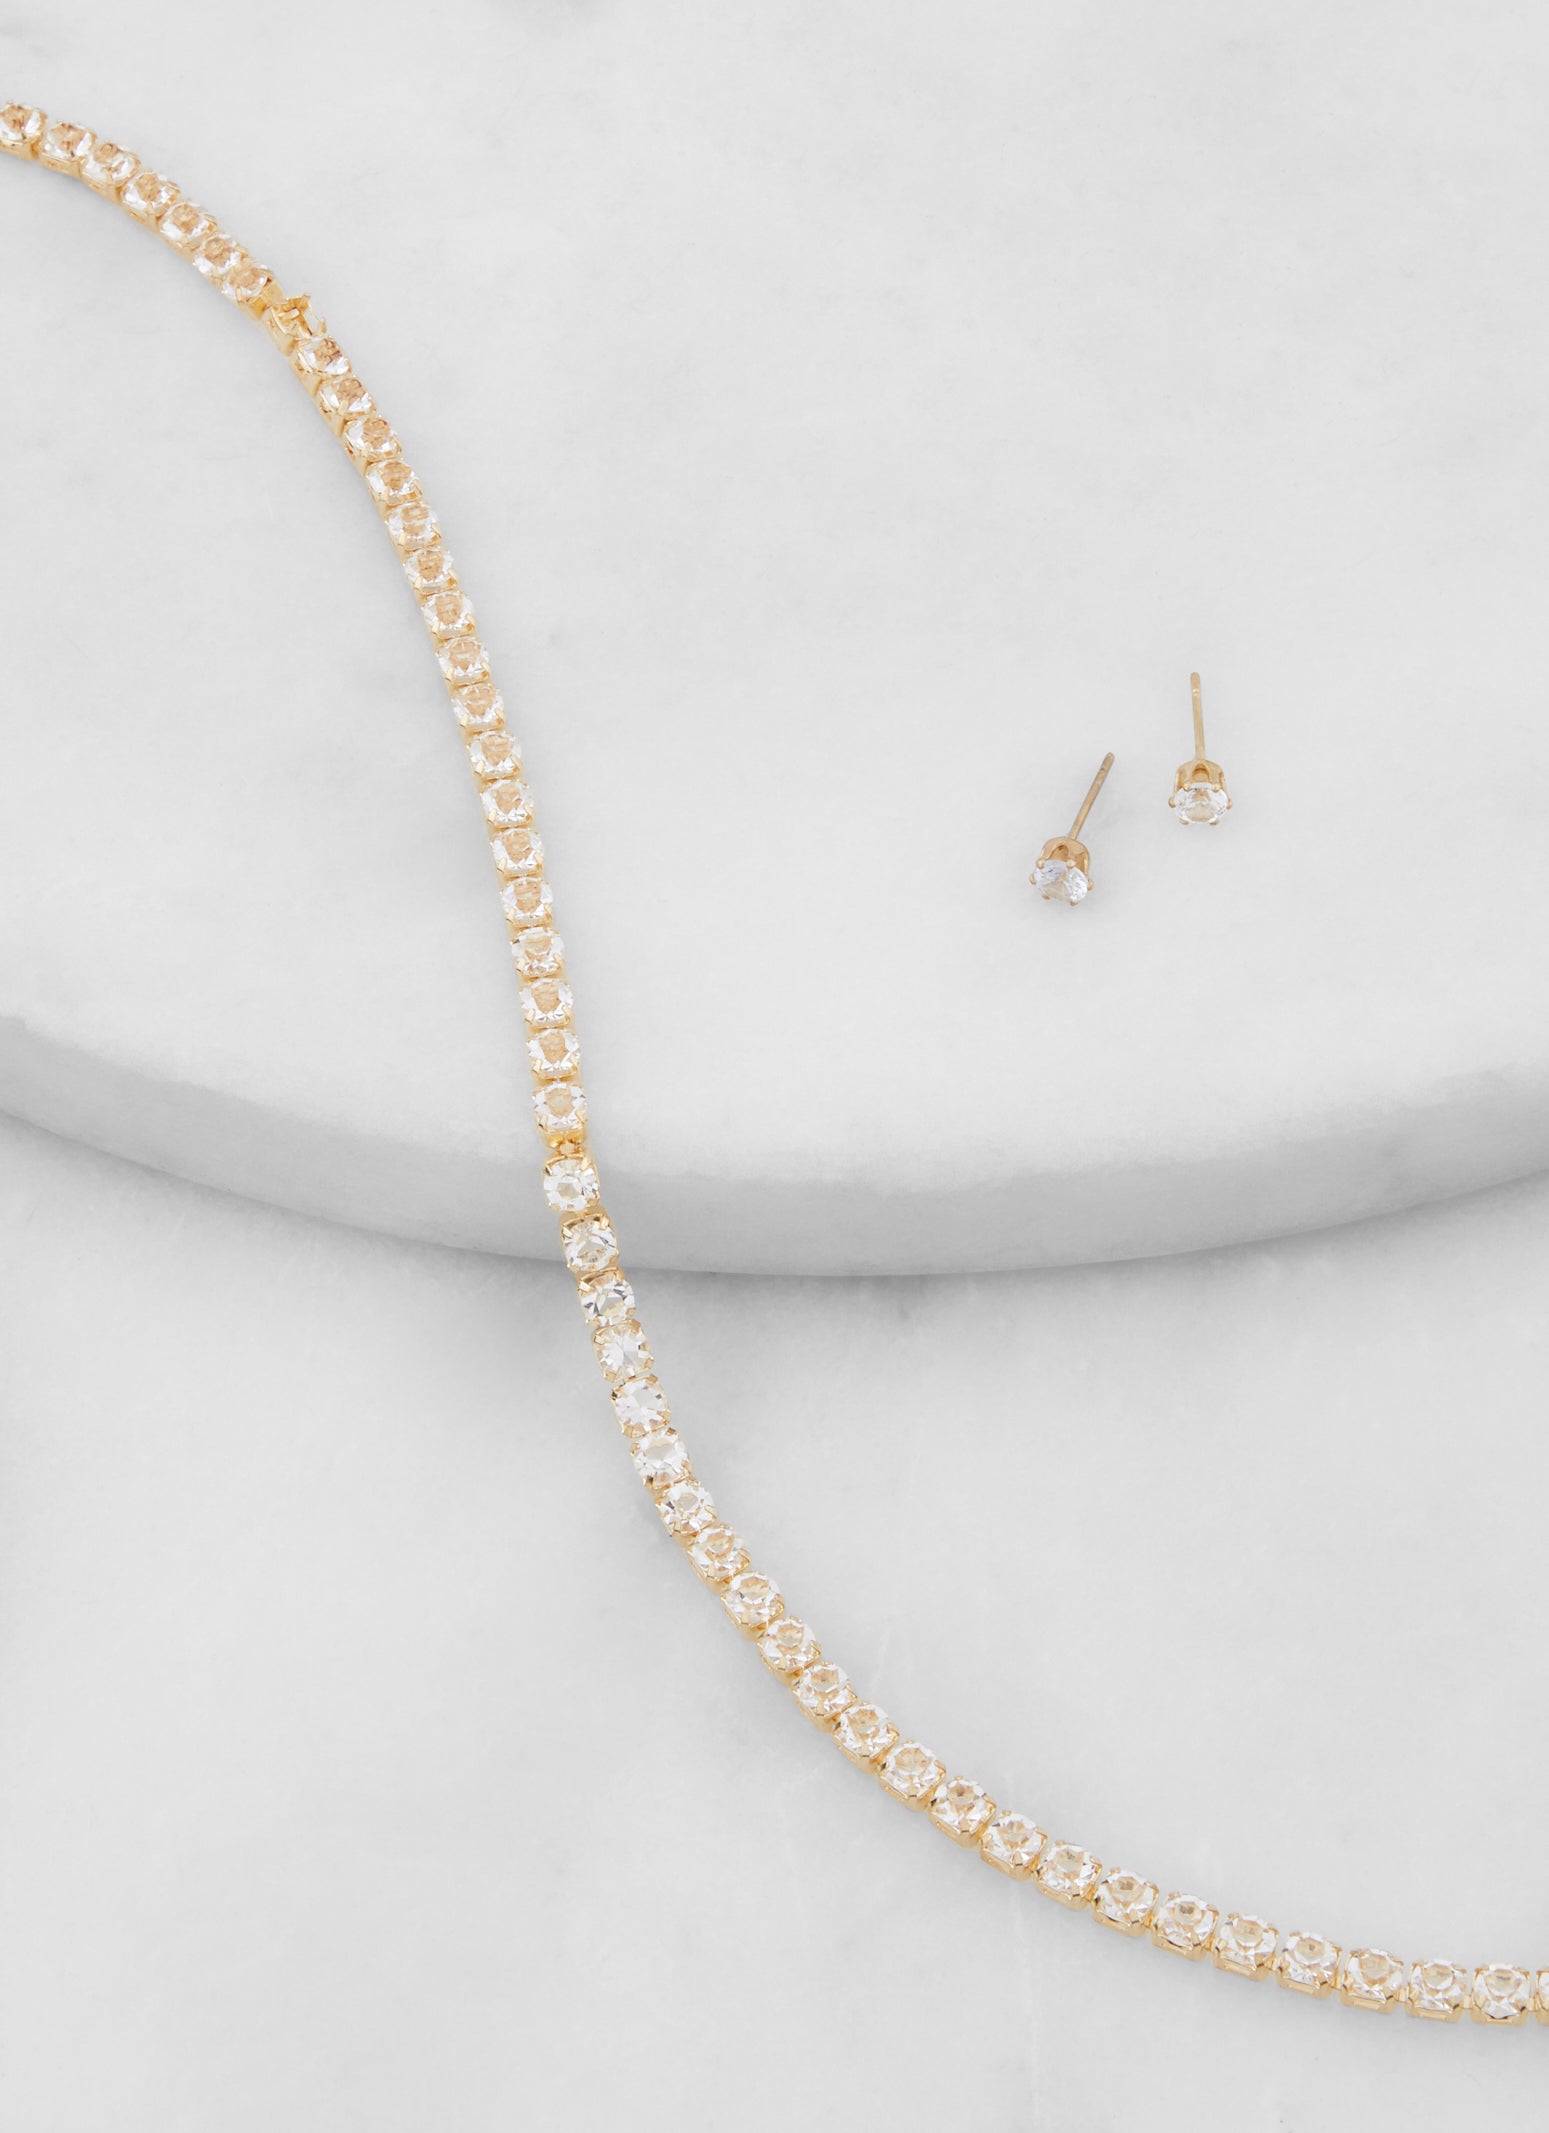 Rhinestone Collar Necklace | David's Bridal